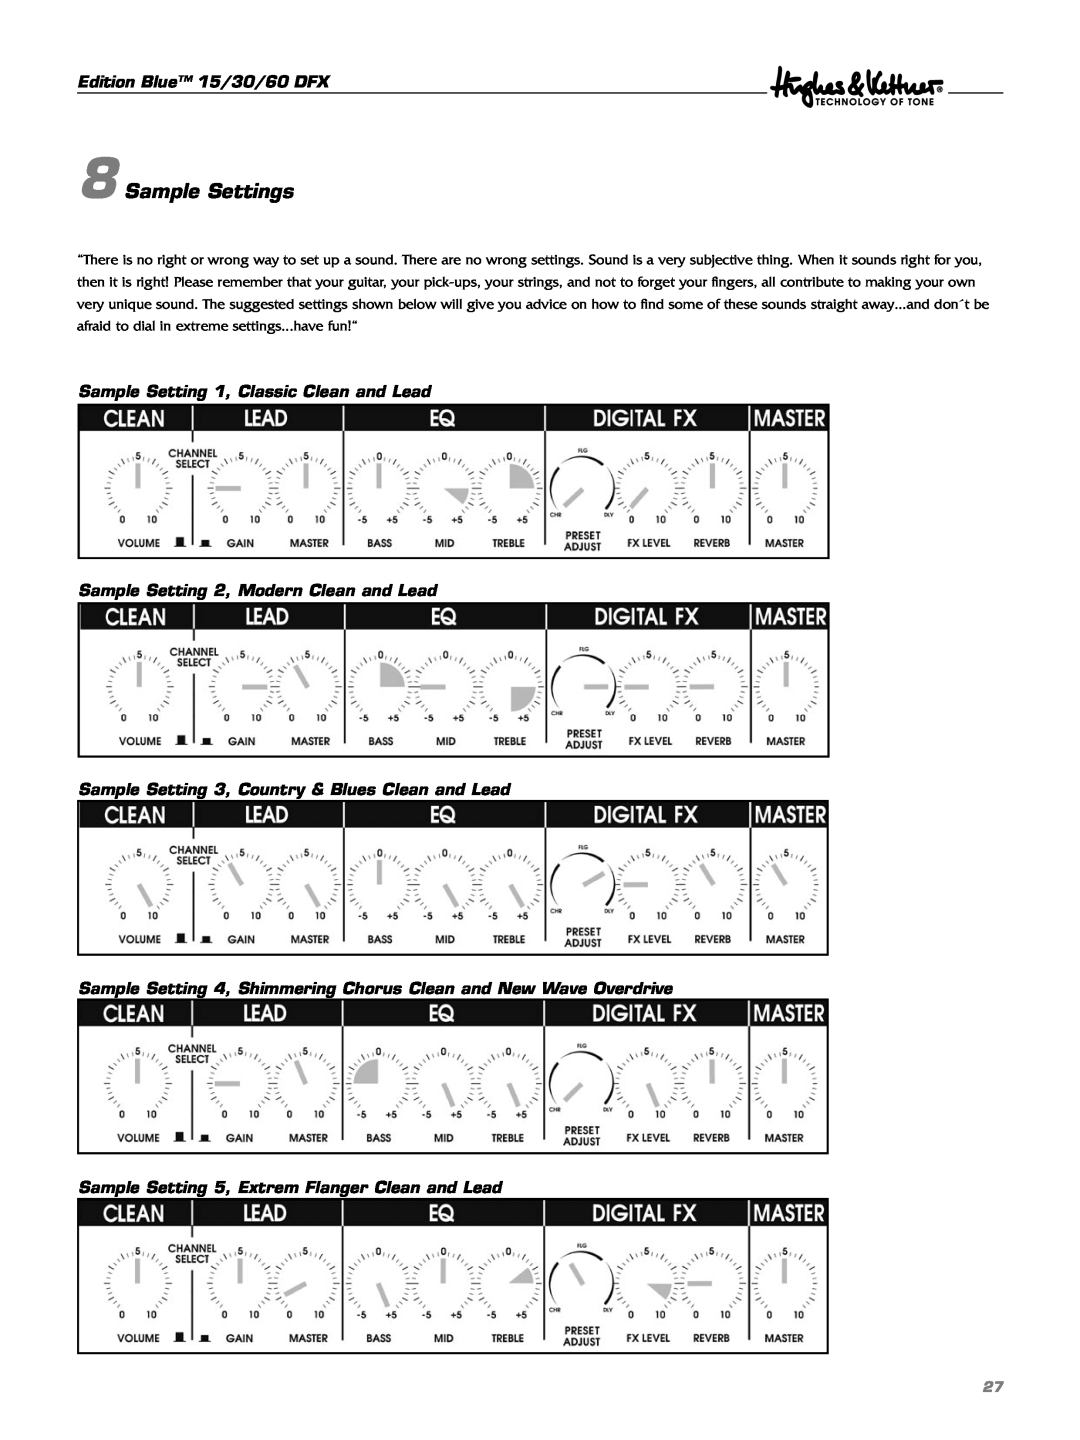 Hughes & Kettner DFX manual Sample Settings 